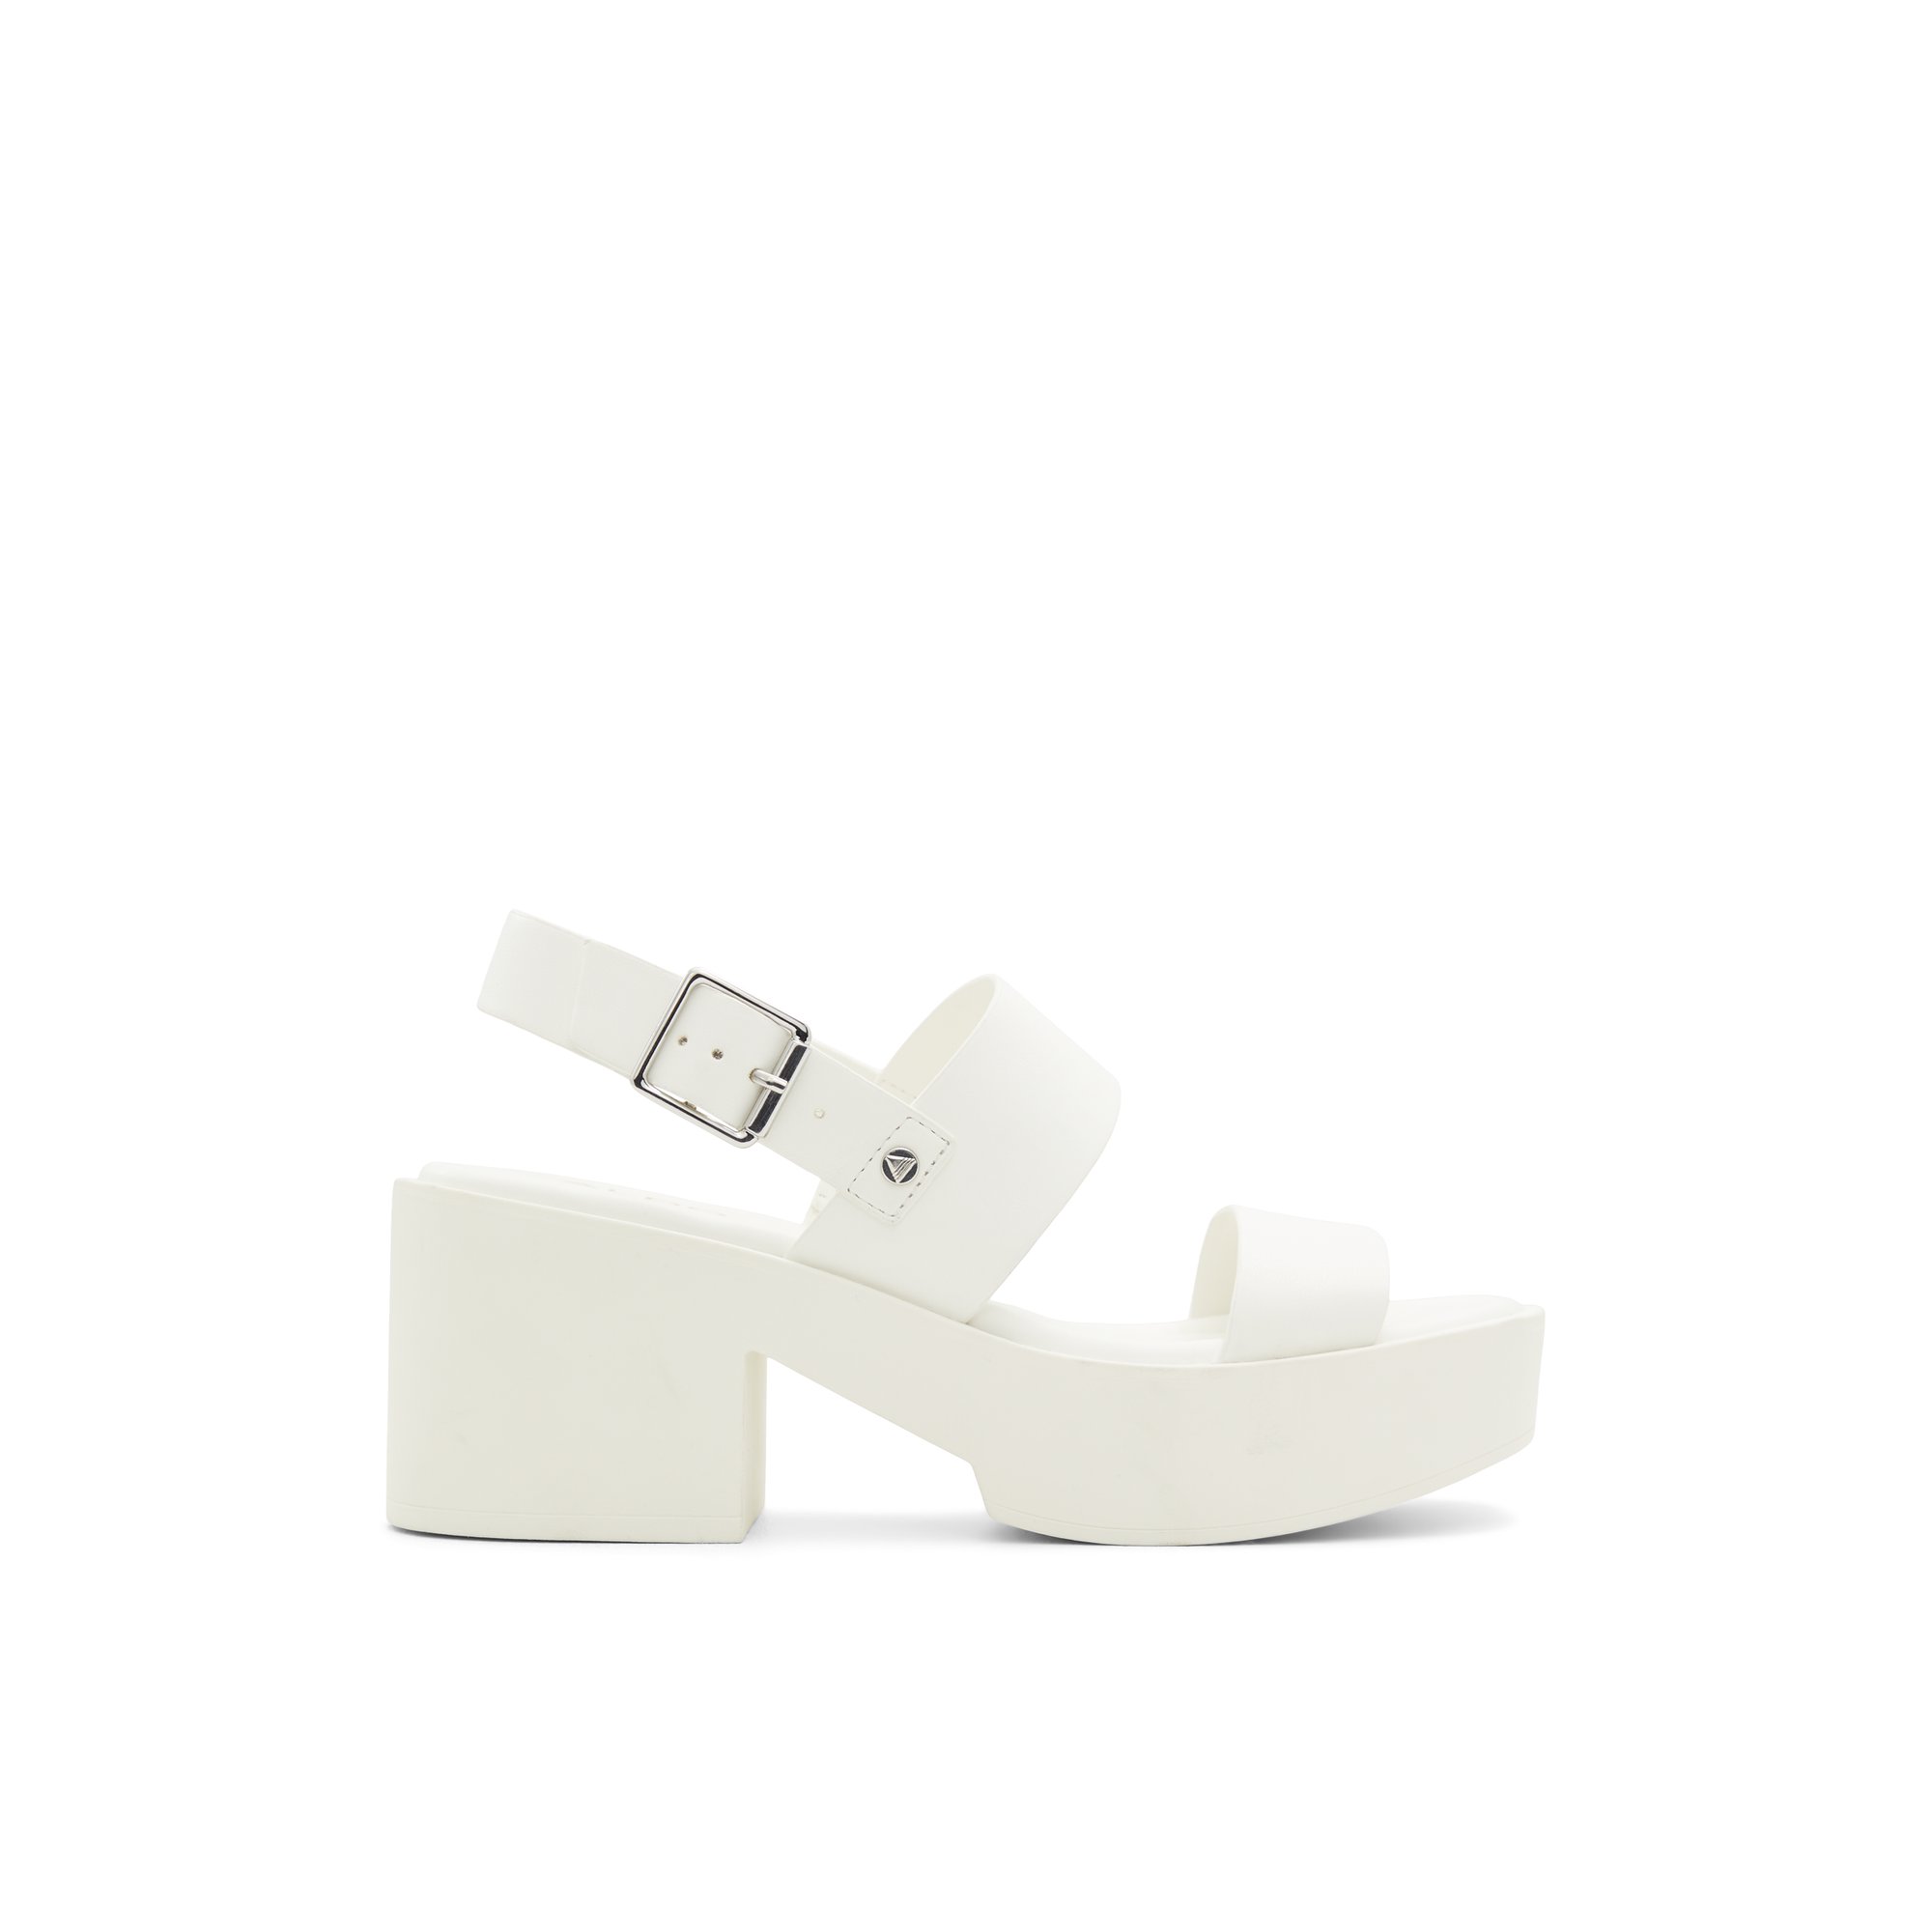 ALDO Laurine - Women's Strappy Sandal Sandals - White